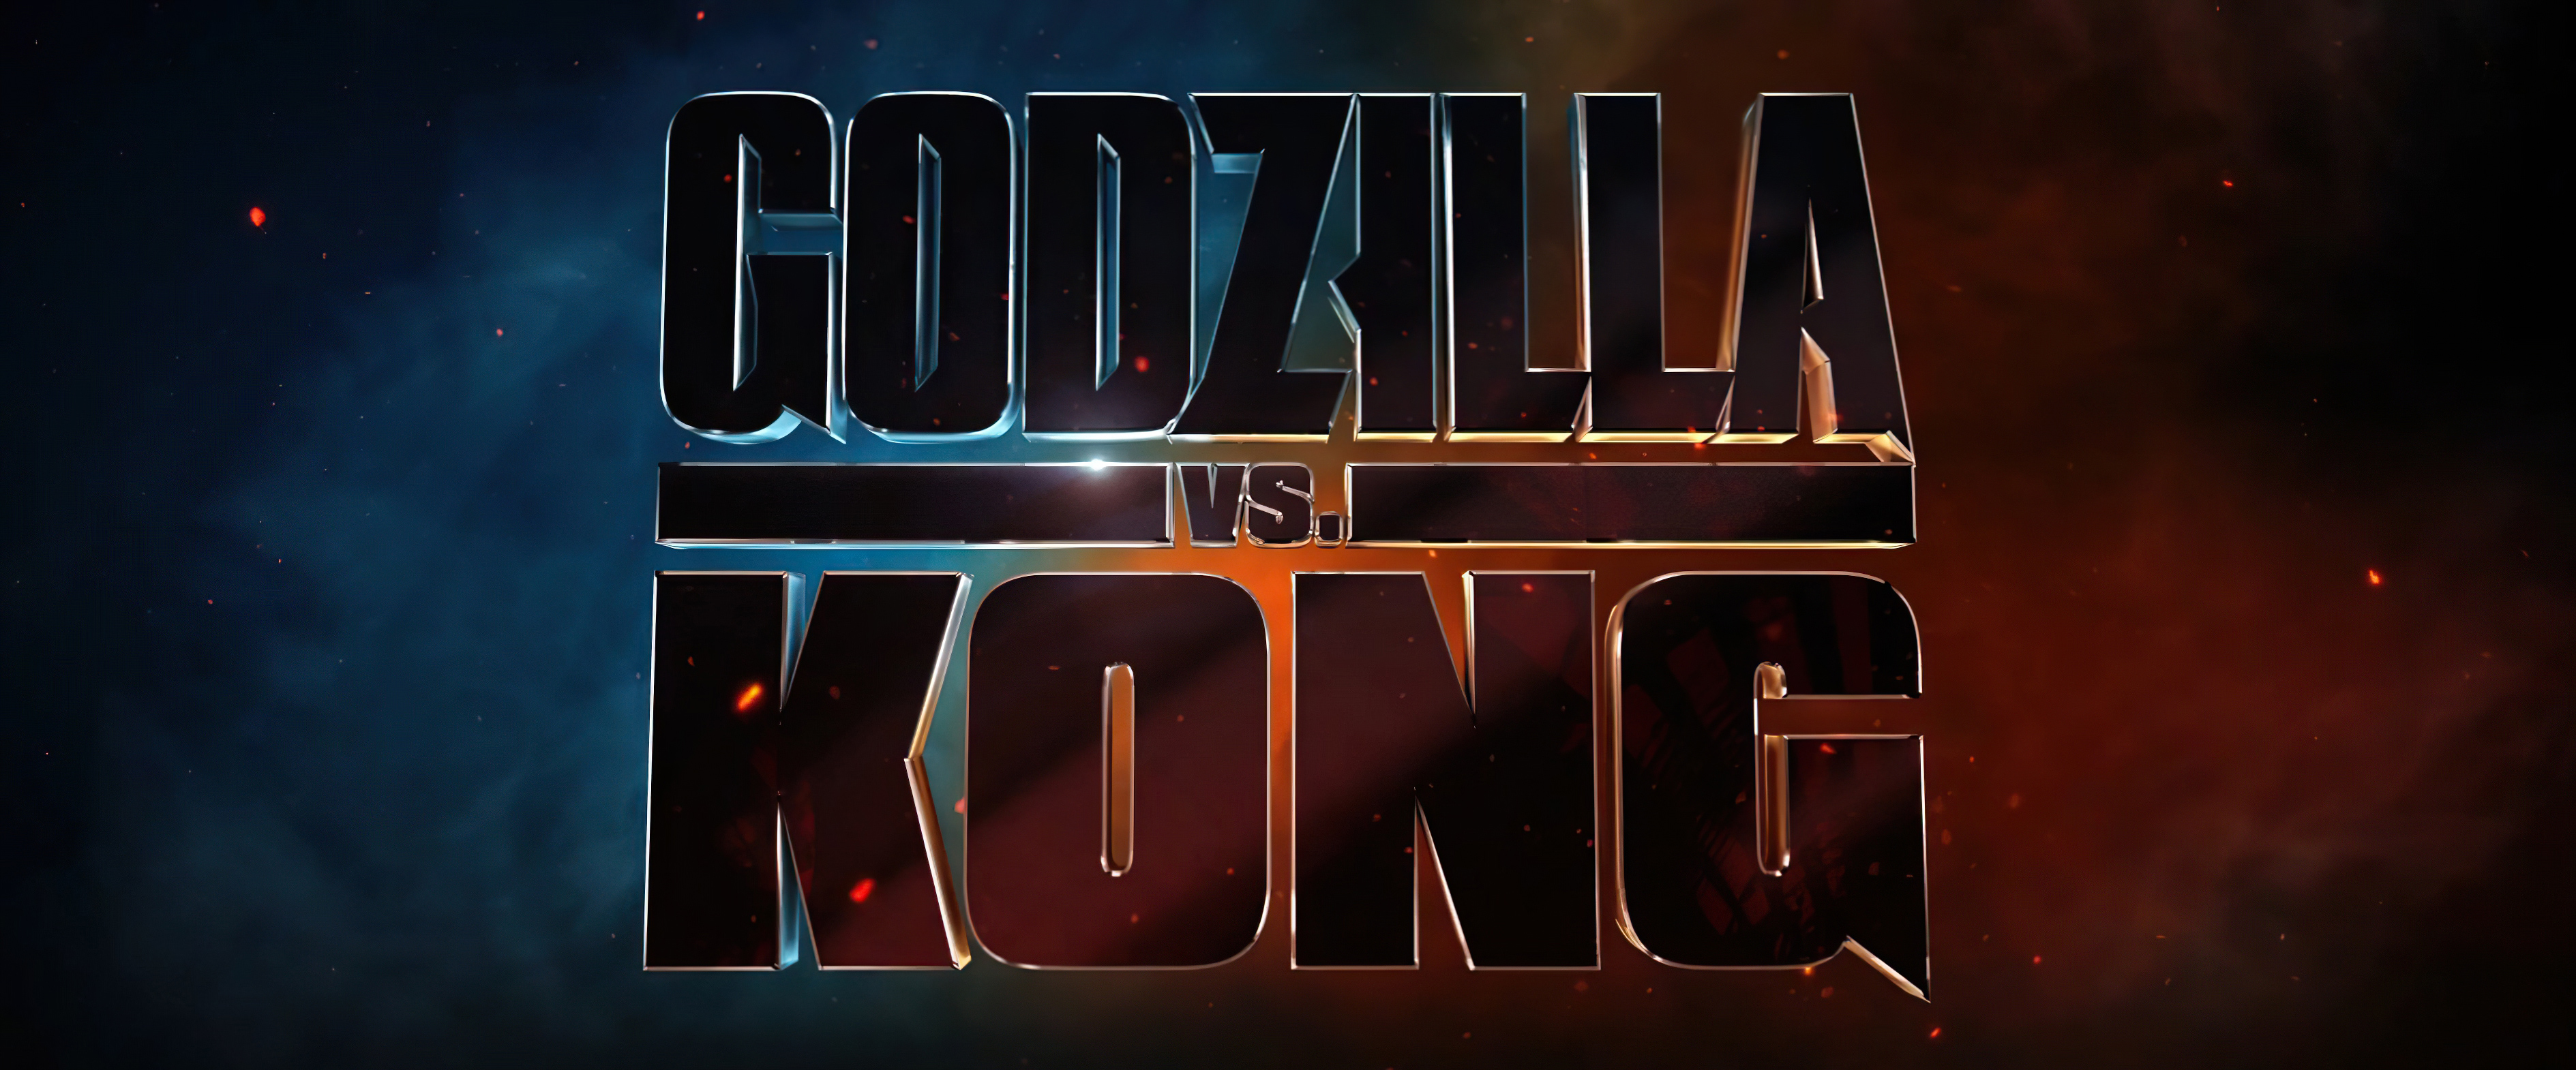 Wallpapers 2021 Movies godzilla vs kong logo on the desktop